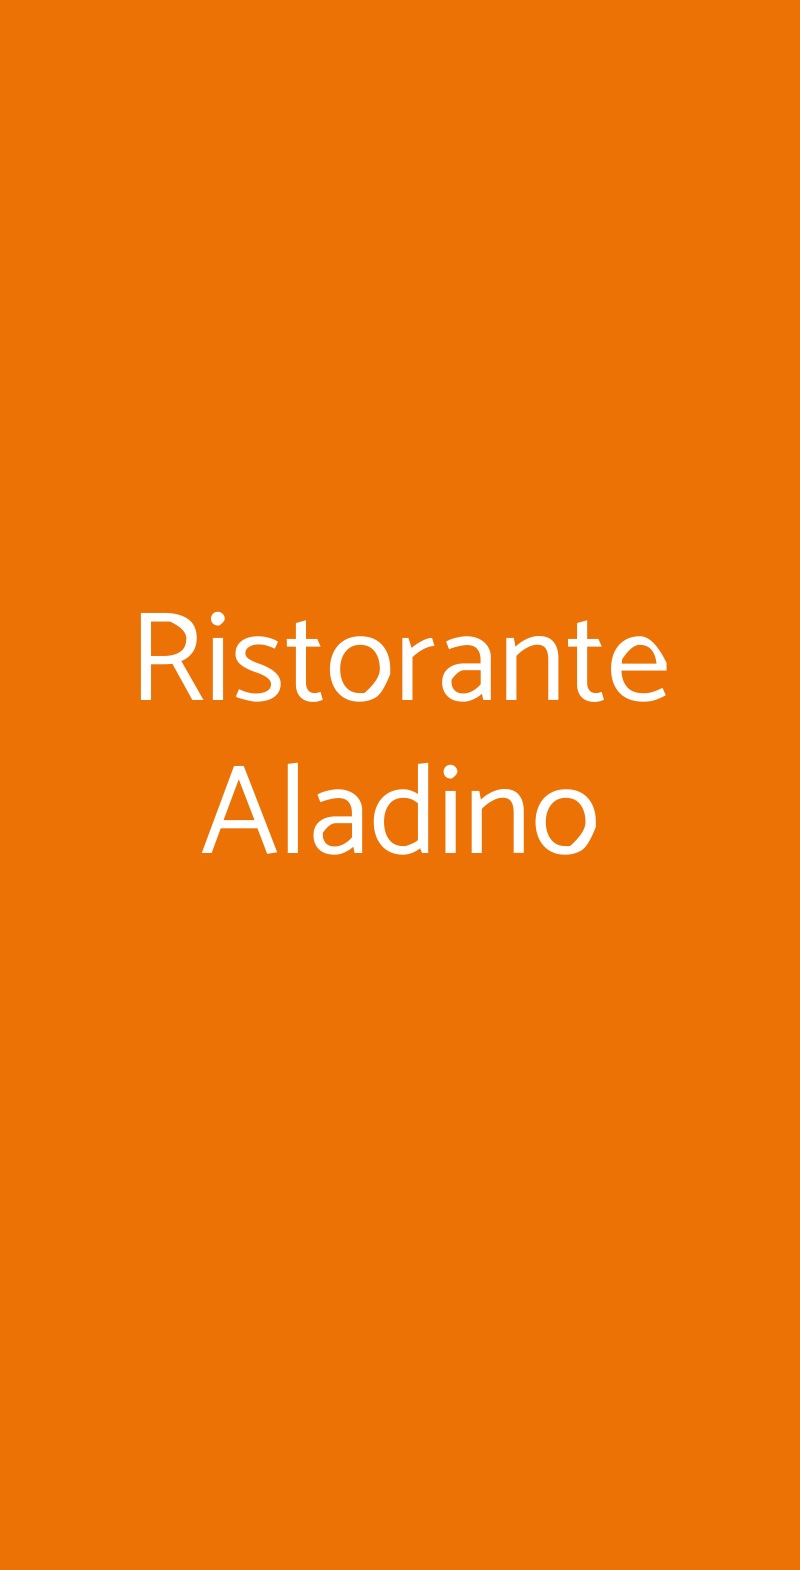 Ristorante Aladino Milano menù 1 pagina